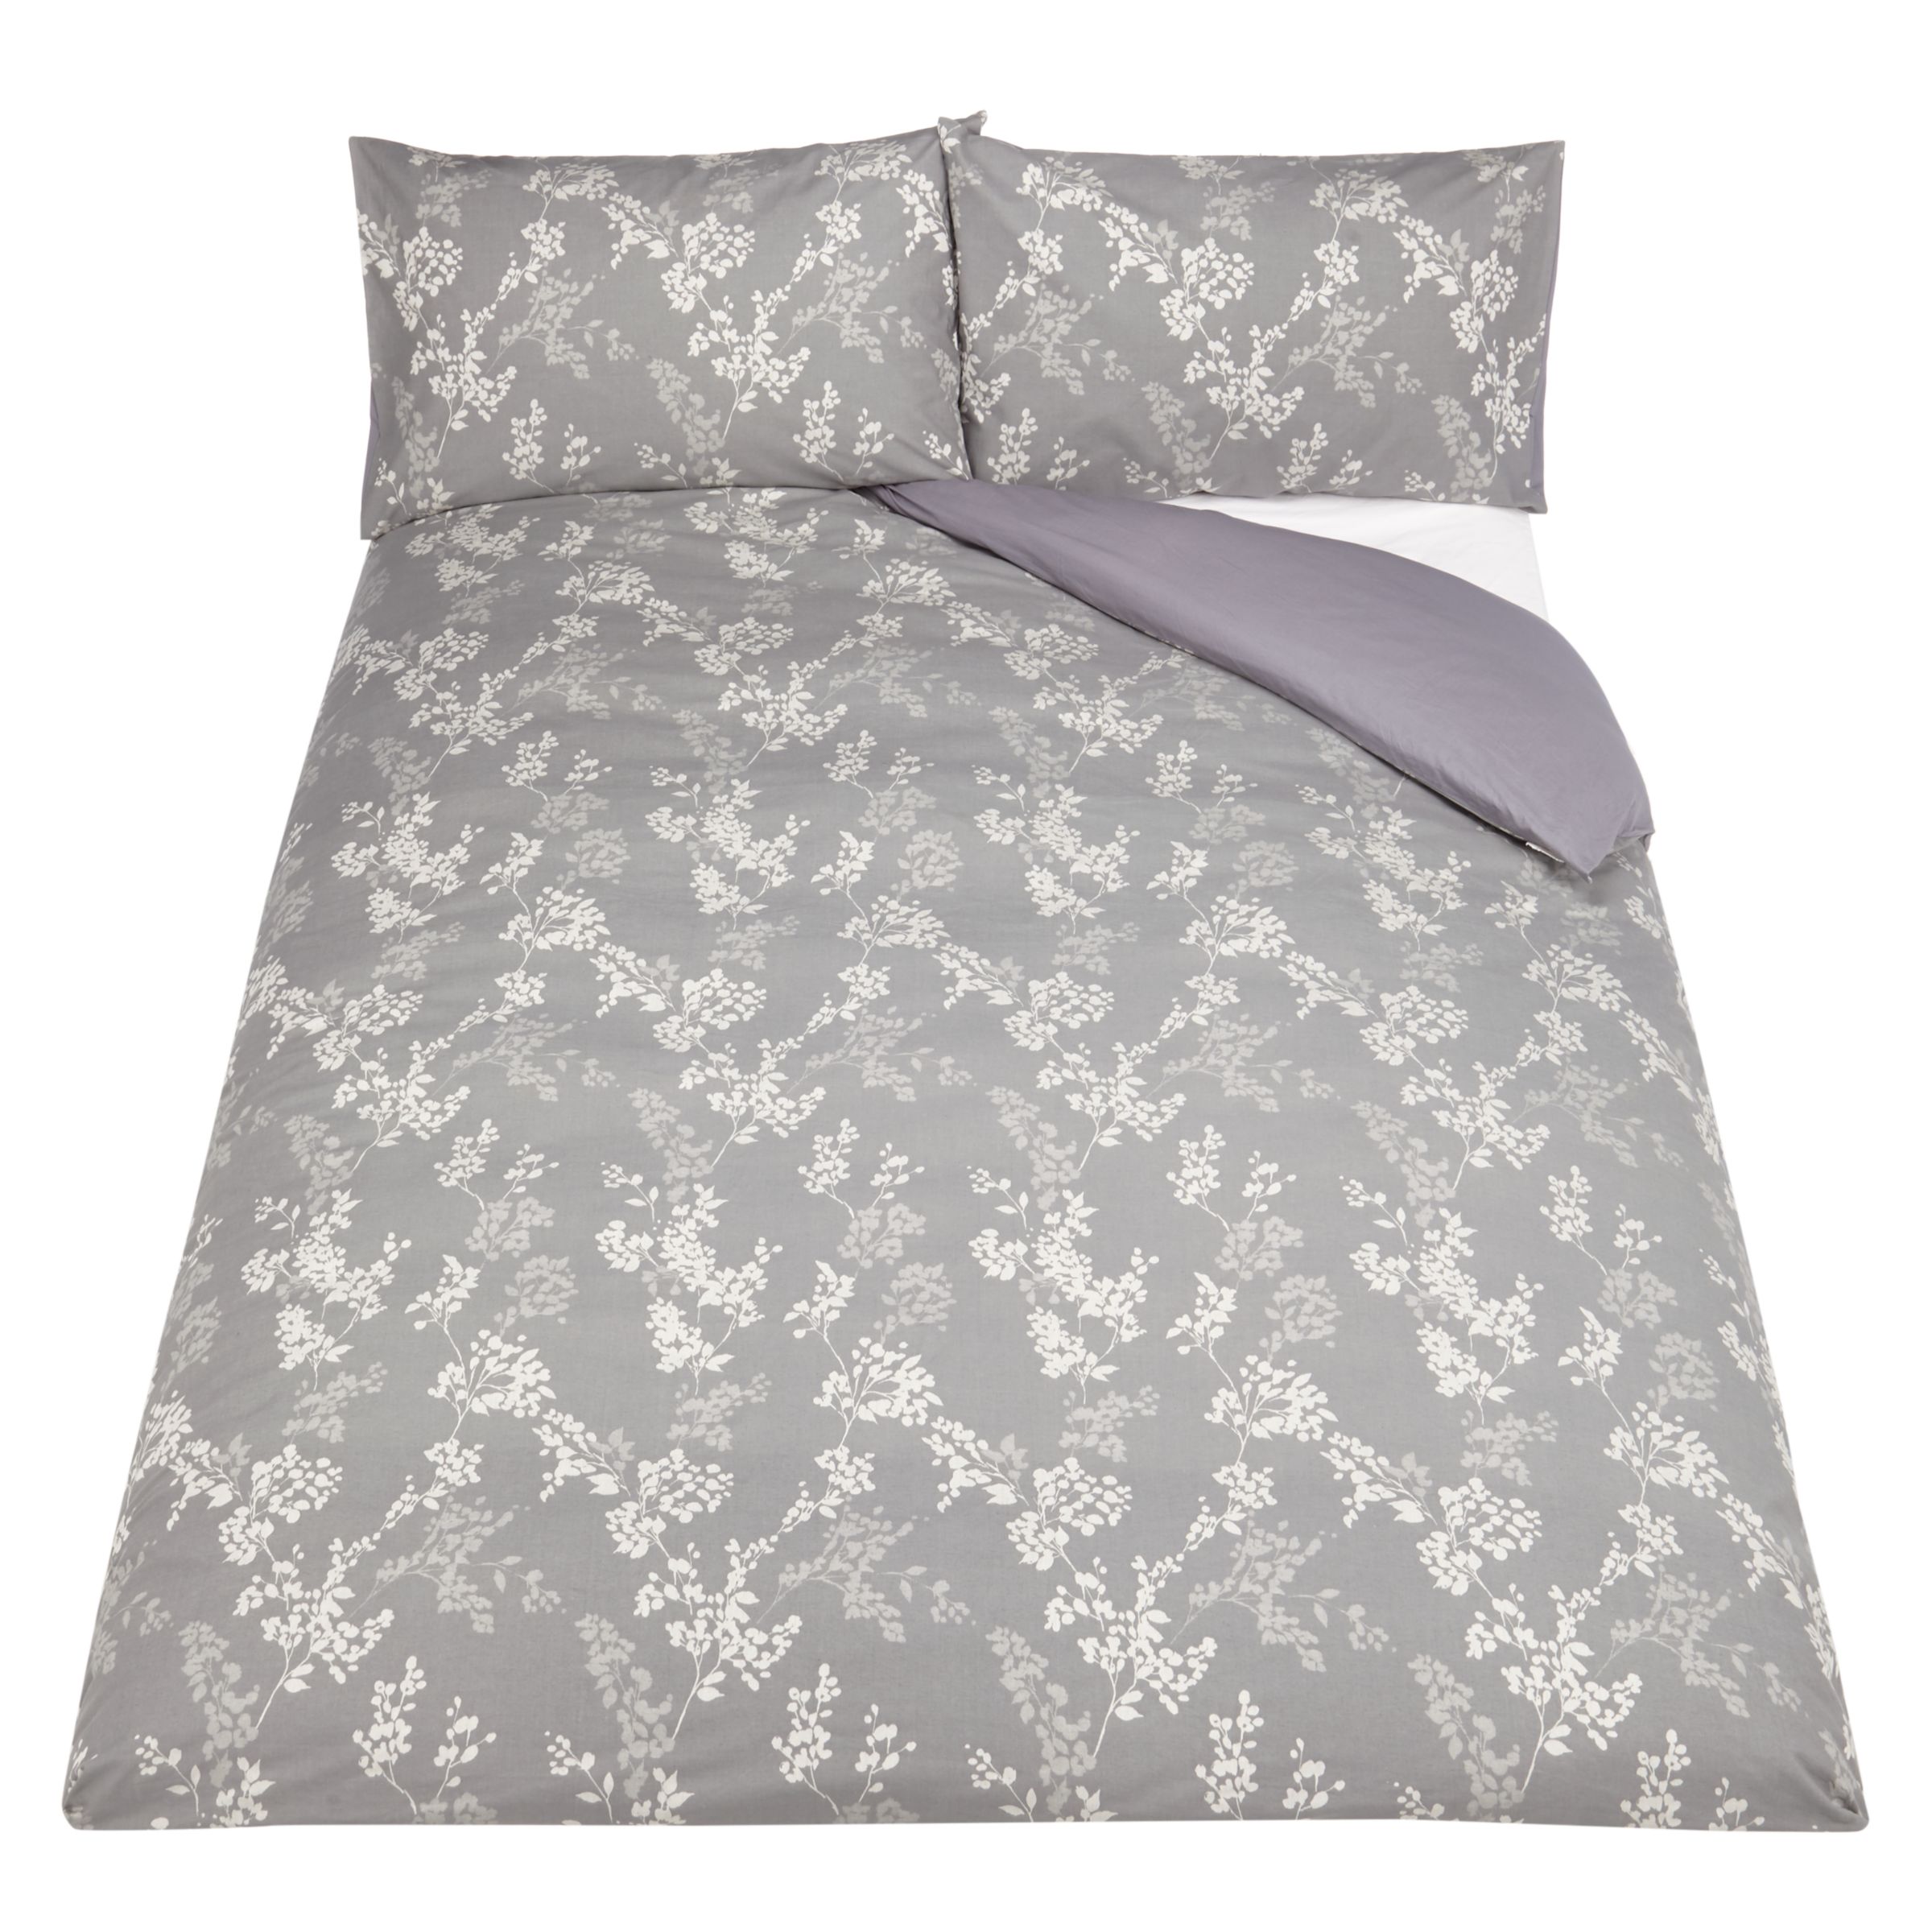 John Lewis & Partners Floral Jacquard Duvet Cover and Pillowcase Set